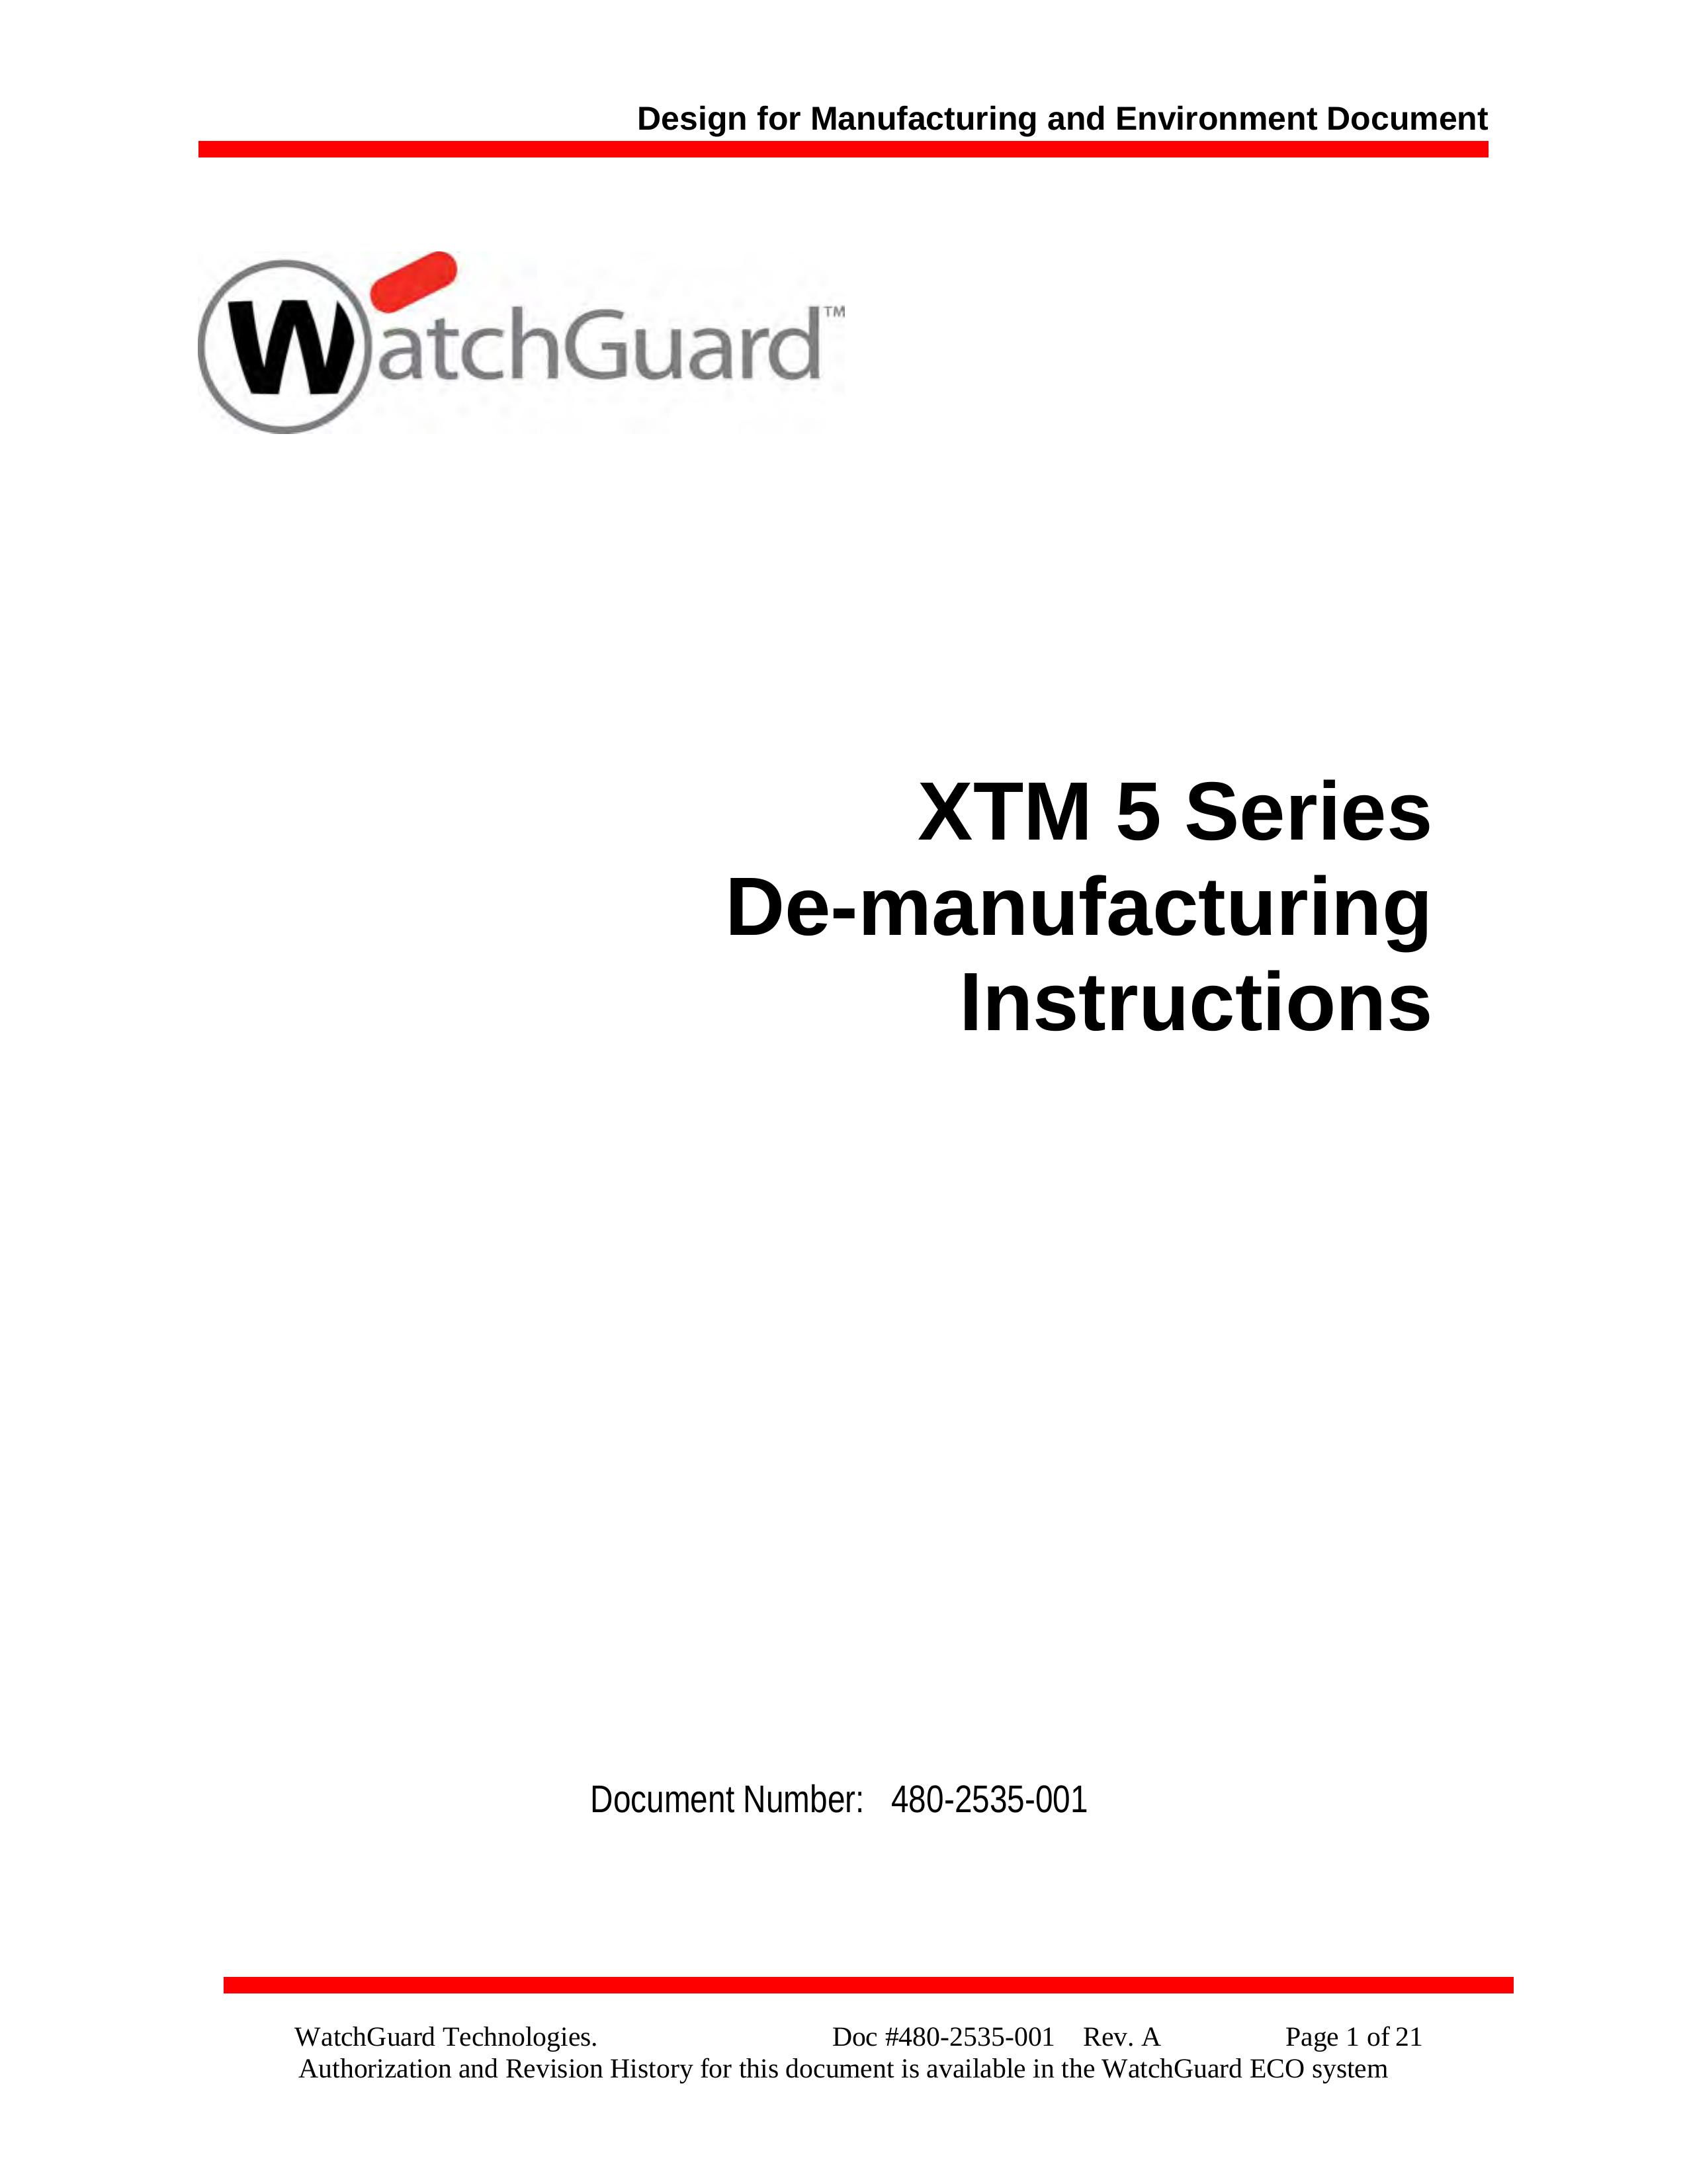 WatchGuard Technologies XTM 5 Series Washer User Manual